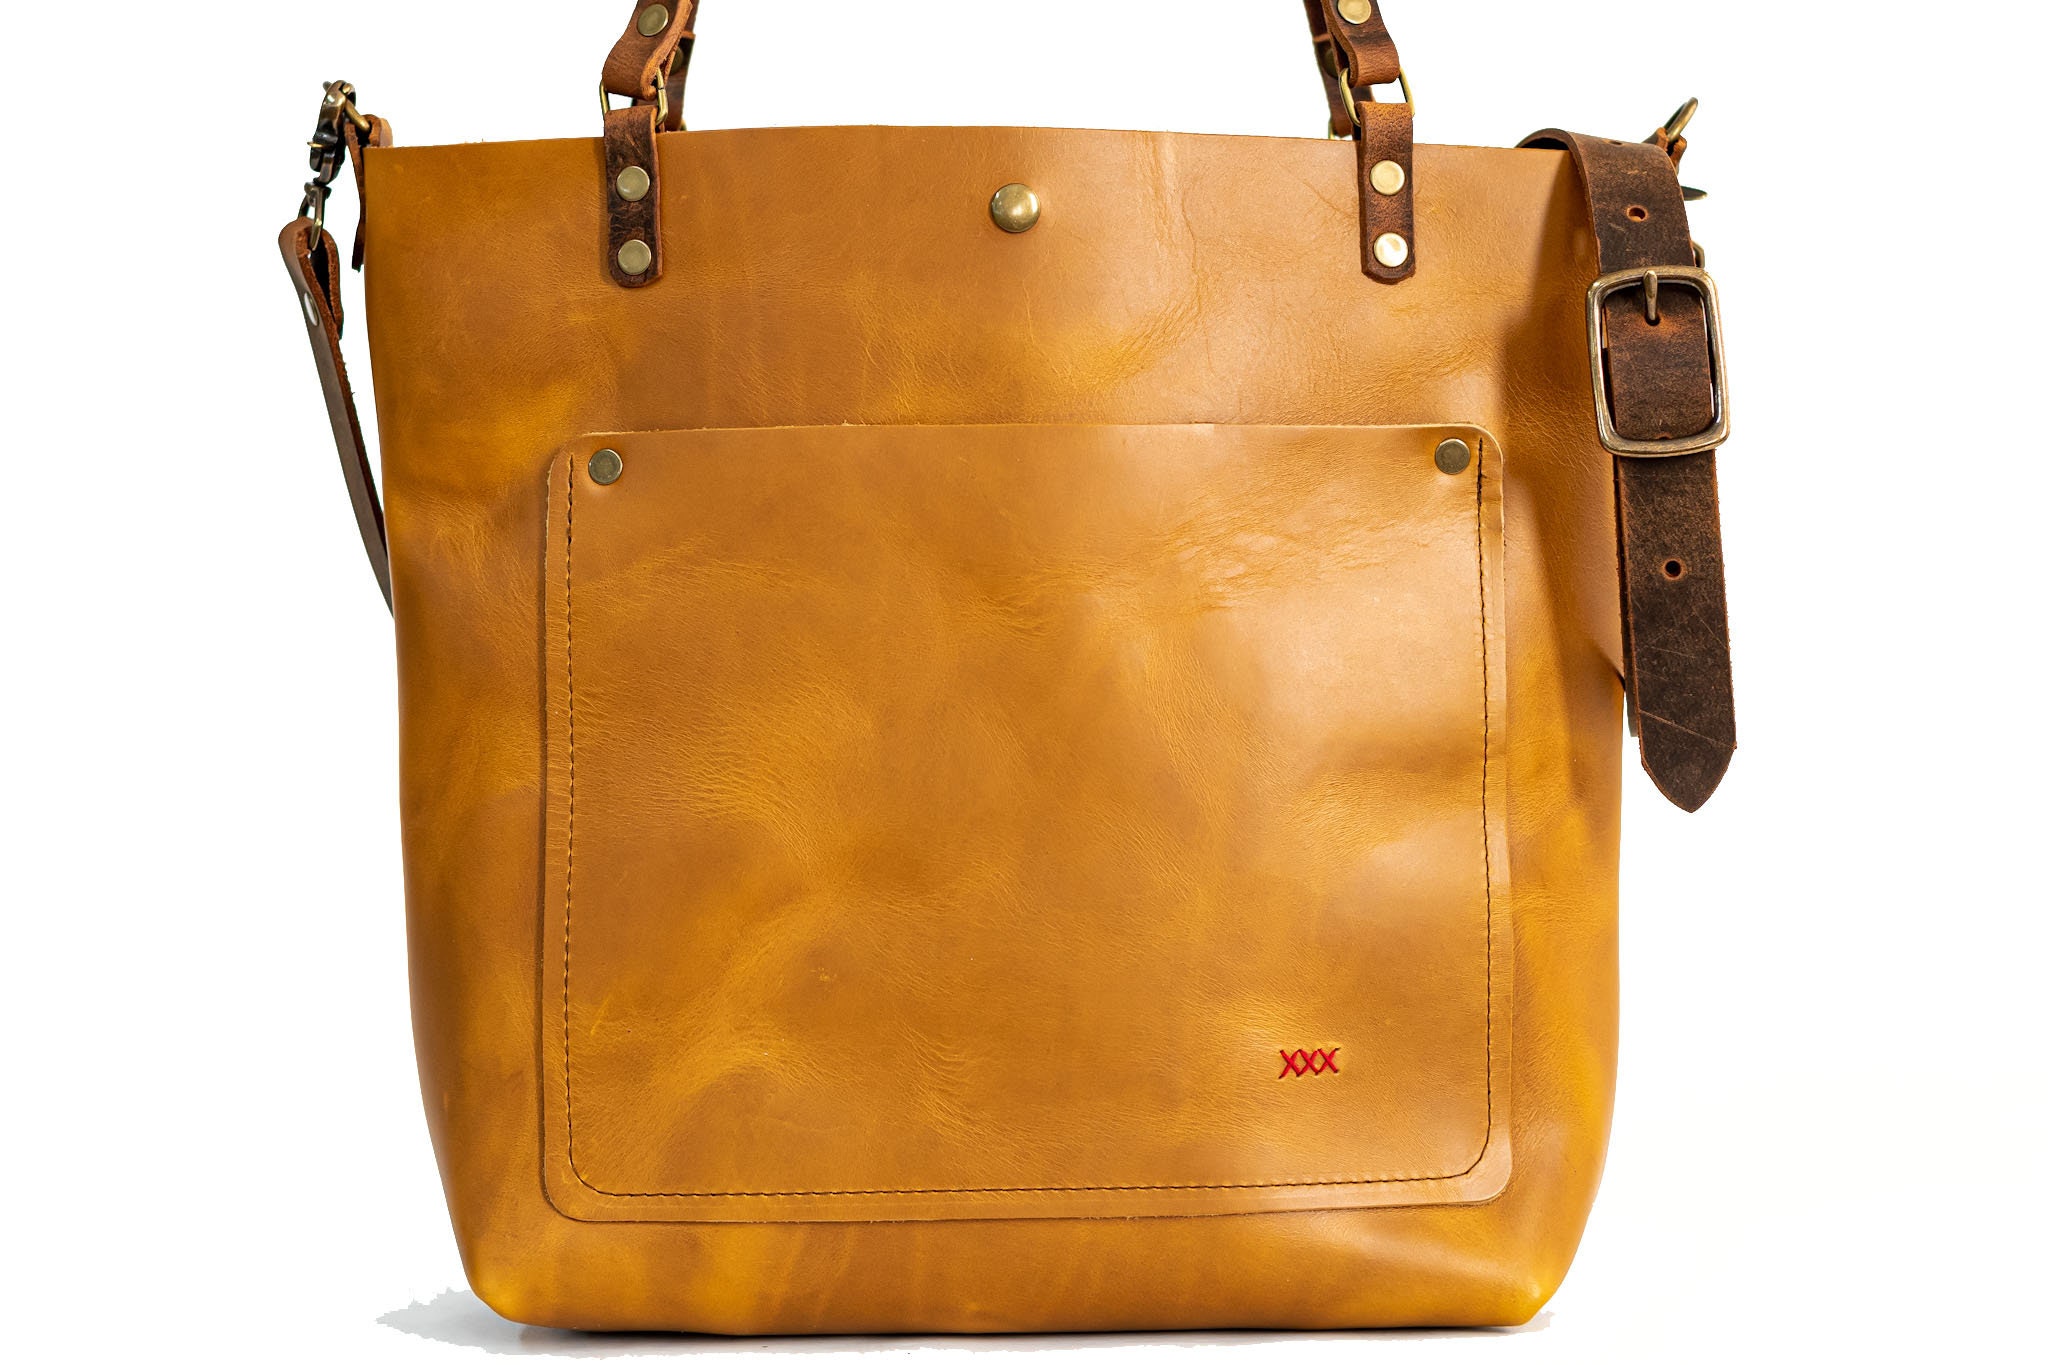 Vintage Genuine Cordé Black Barrel Handbag/Bag/Purse With Brass Fittings  Made in England - 1940's Medium Size - Yahoo Shopping